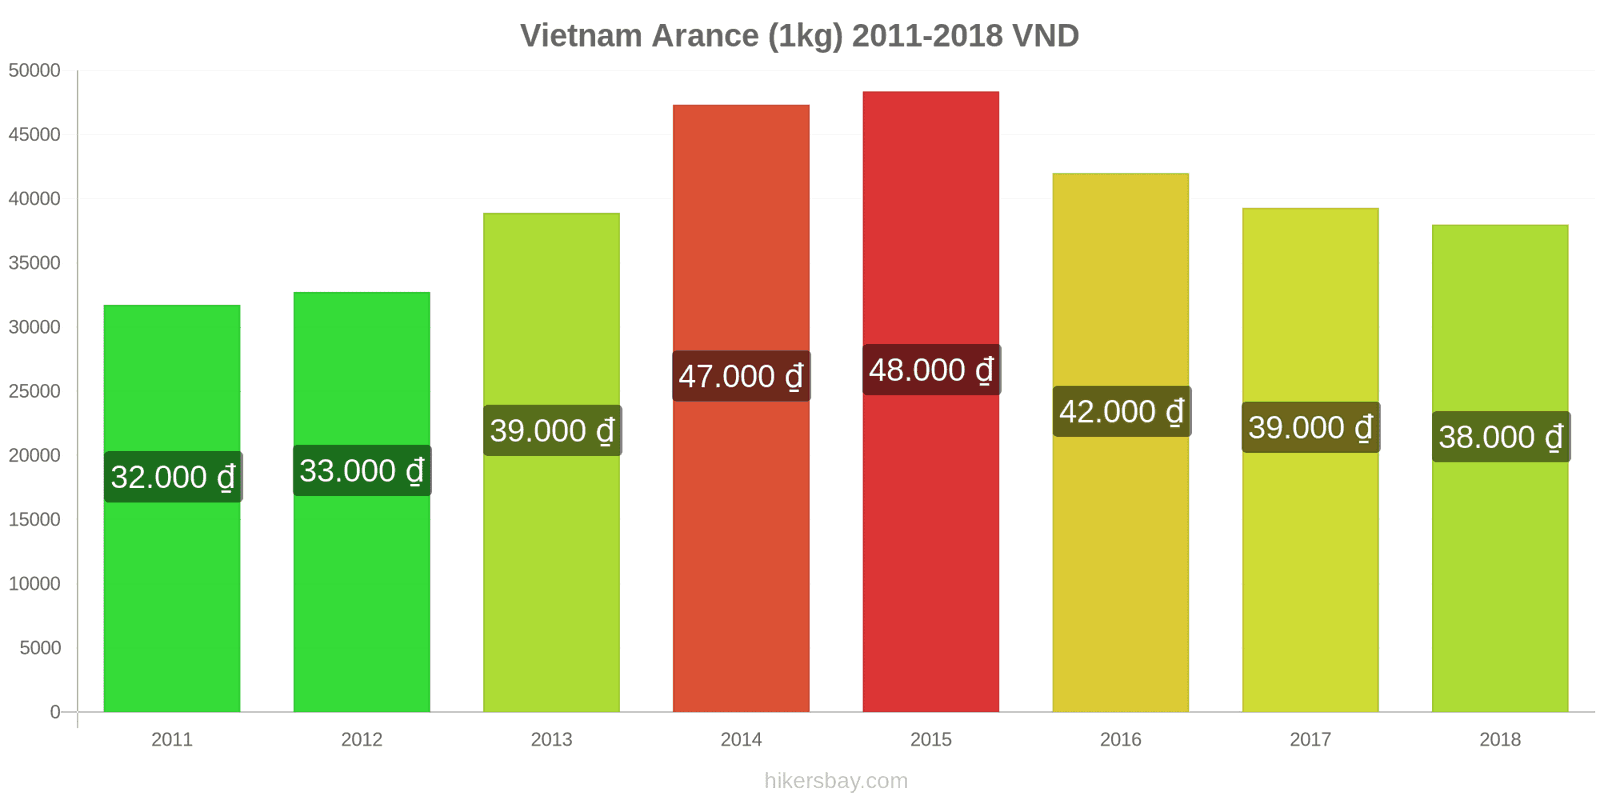 Vietnam cambi di prezzo Arance (1kg) hikersbay.com